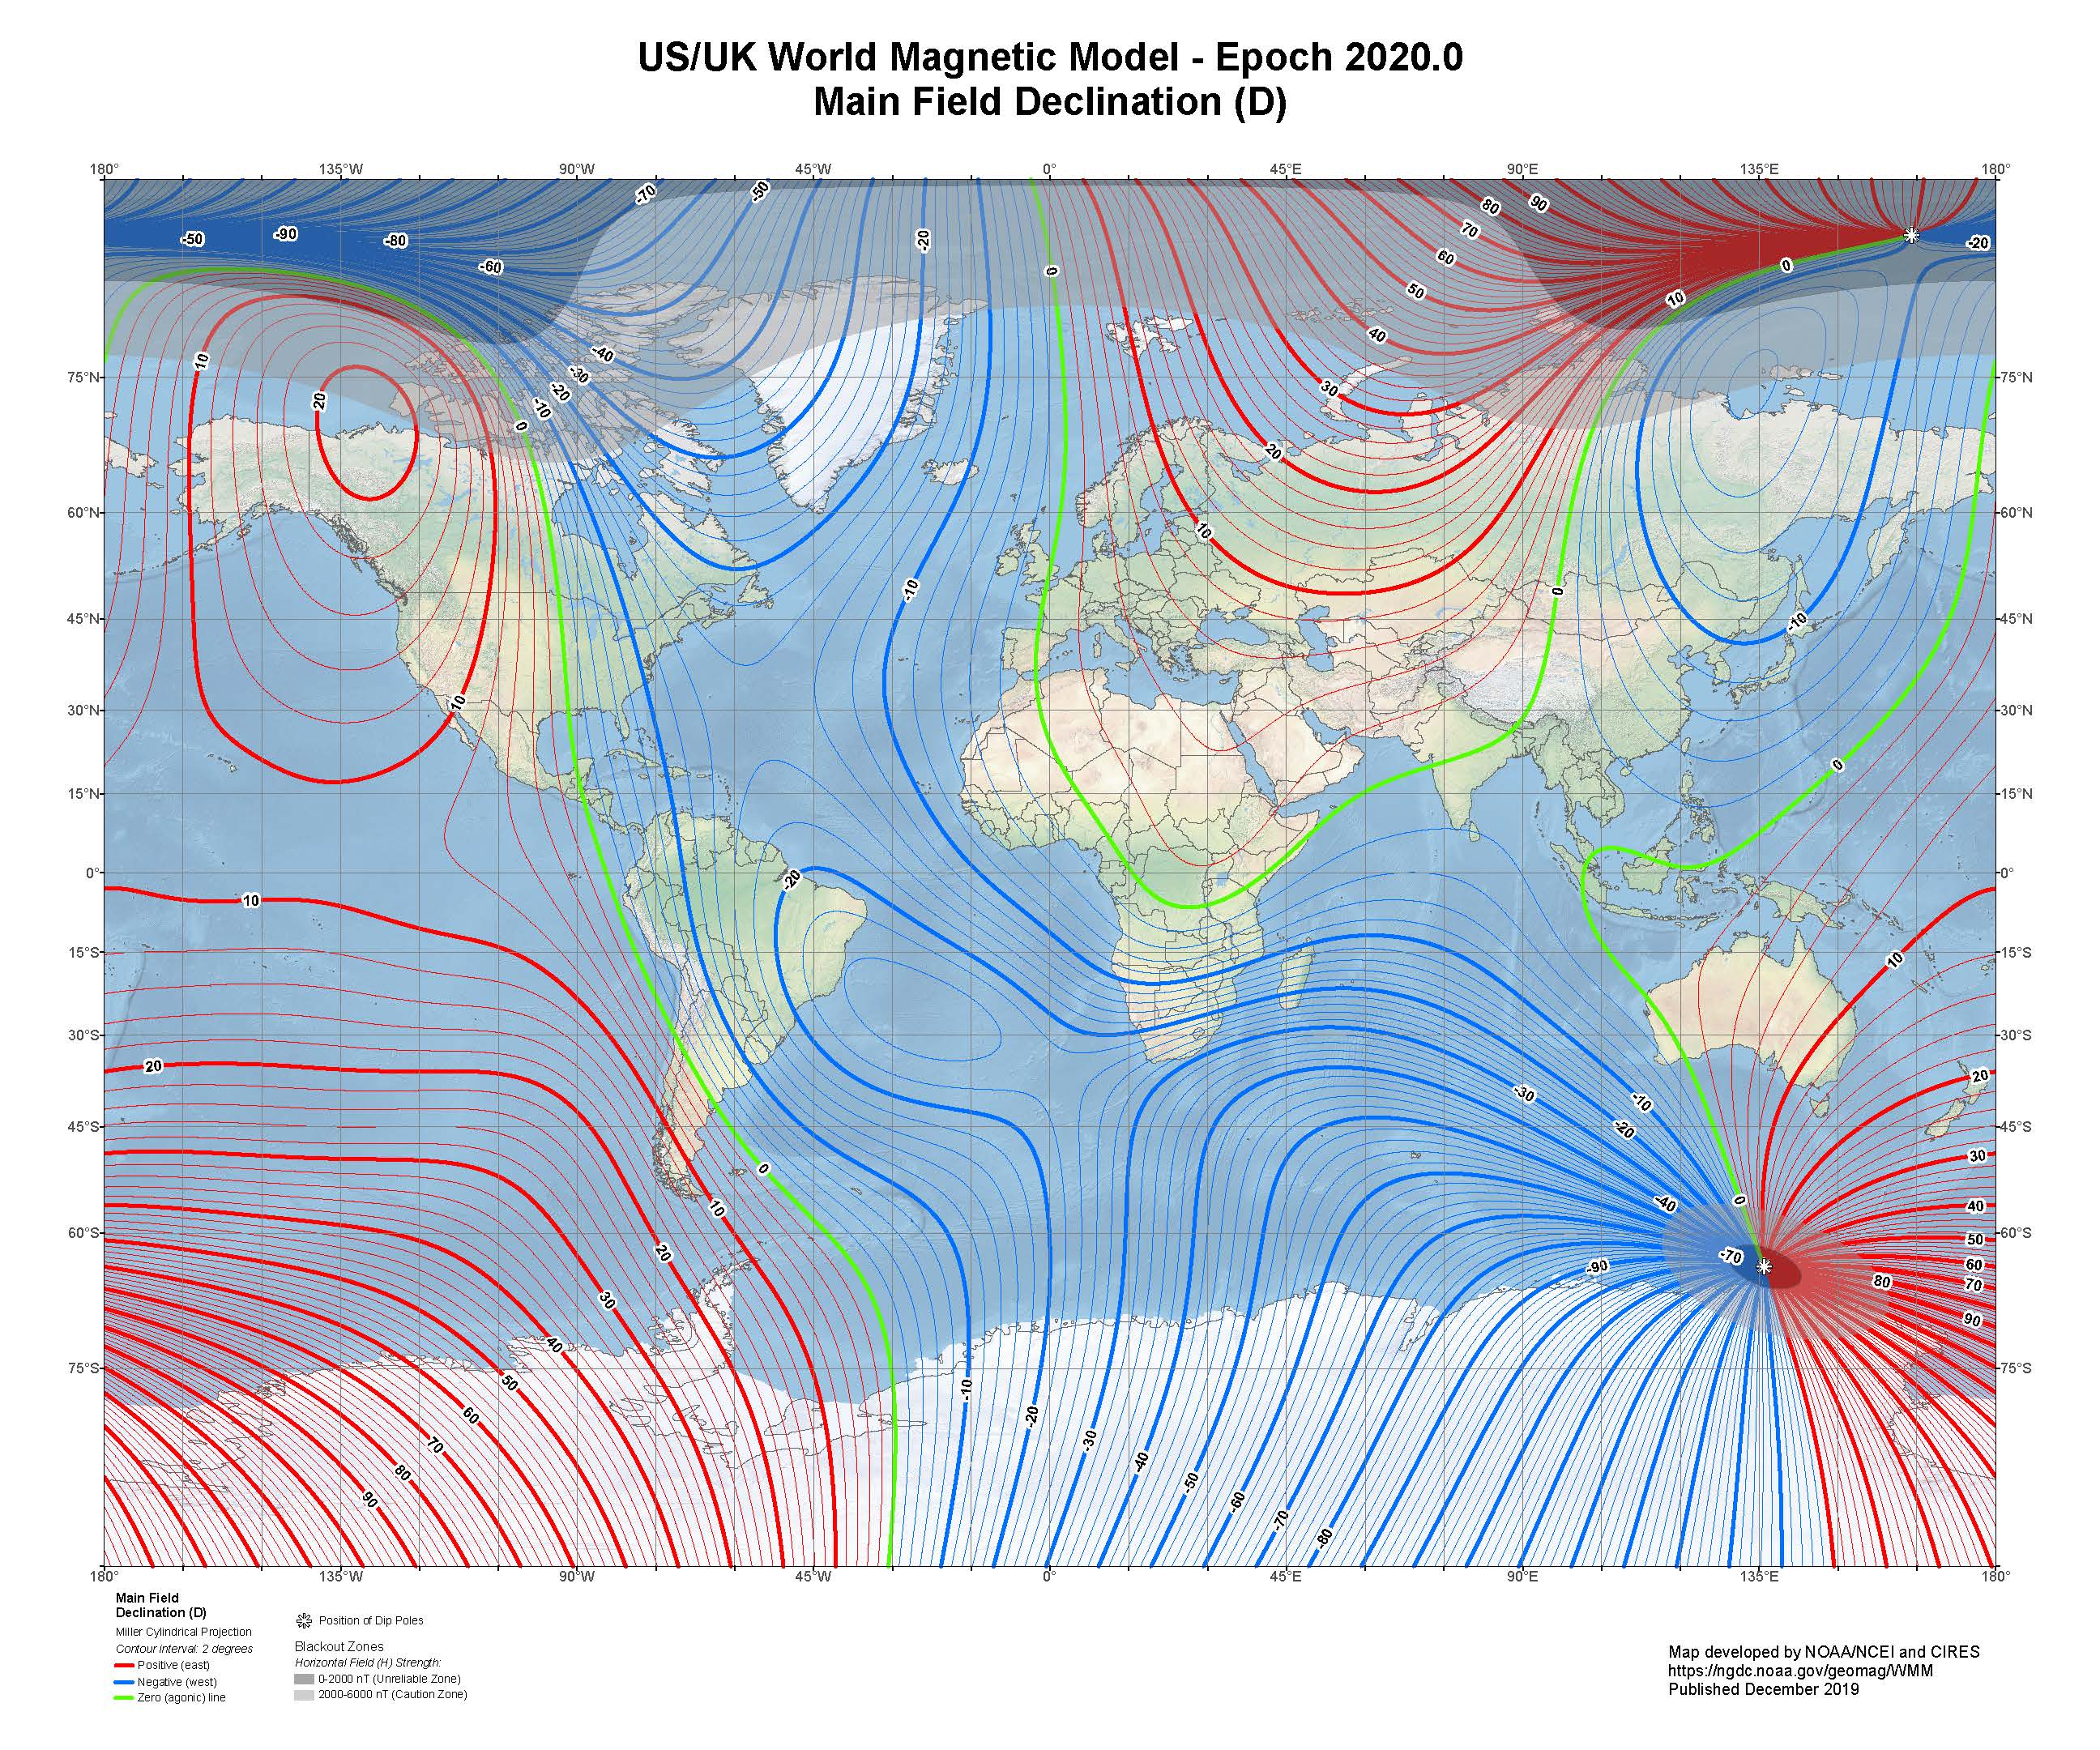 US/UK World Magnetic Model - Epoch 2020.0: Main Field Declination